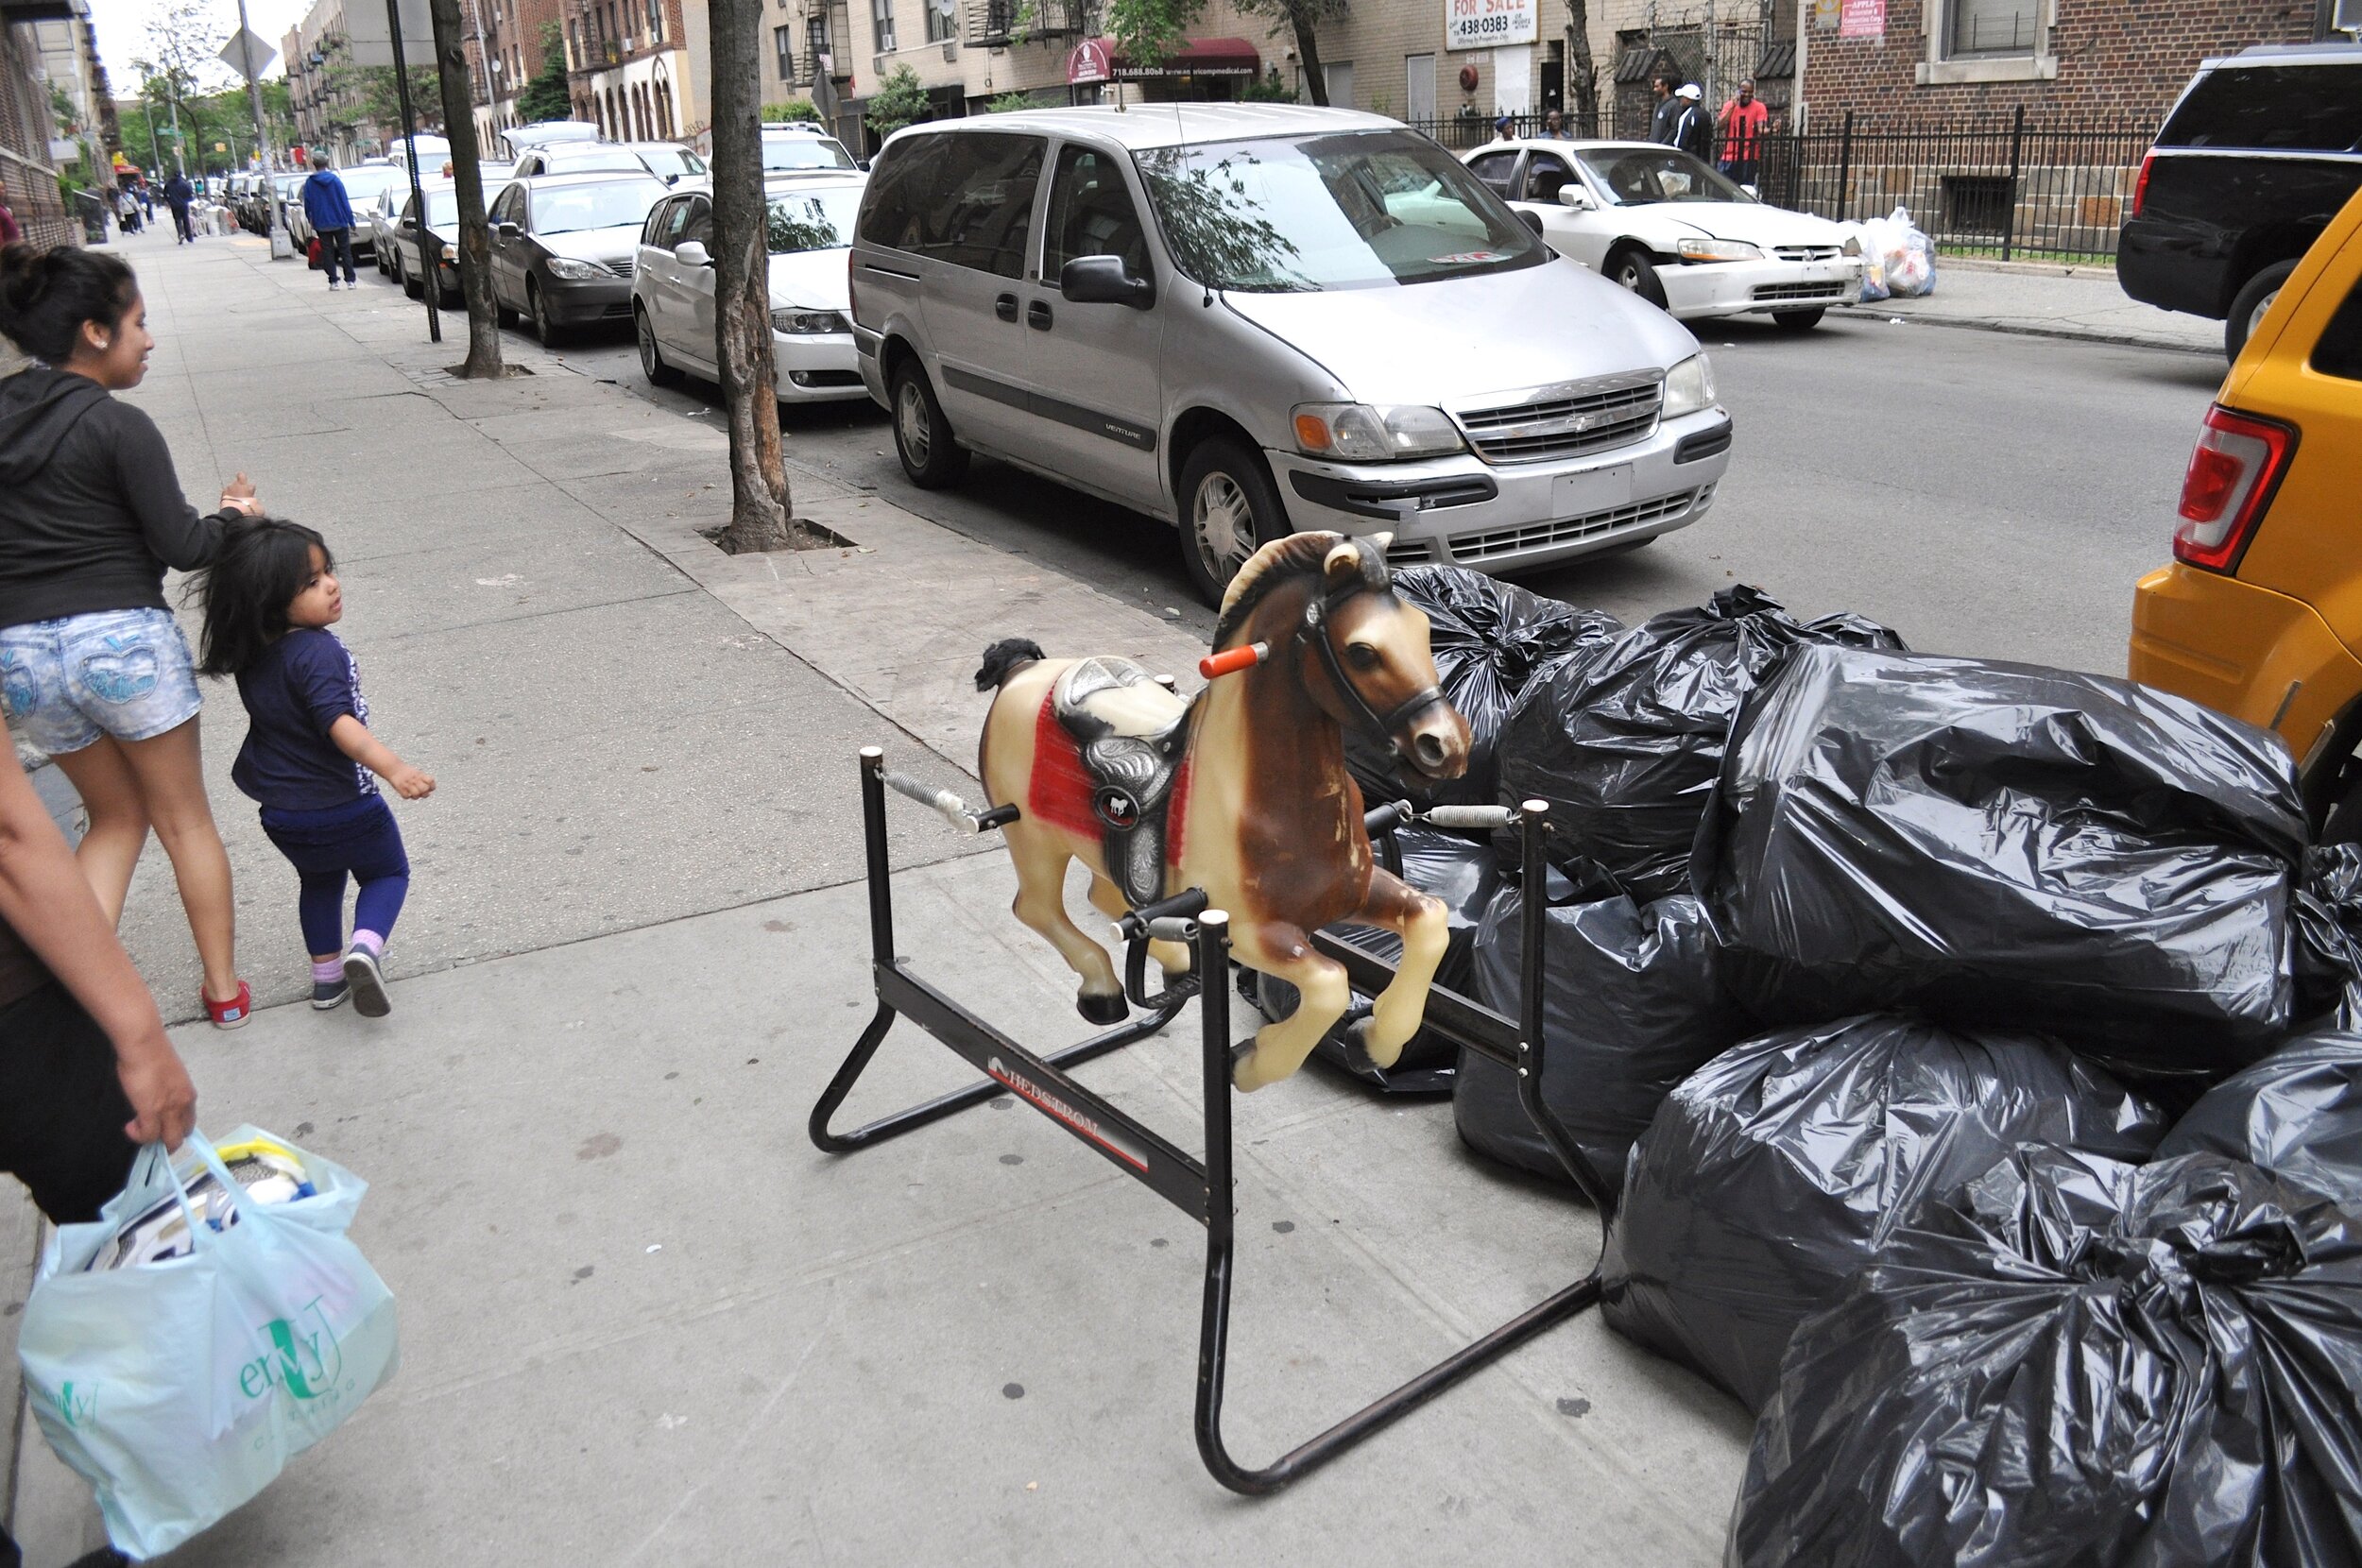 Forbidden Horse Ride - Brooklyn, New York (2015)